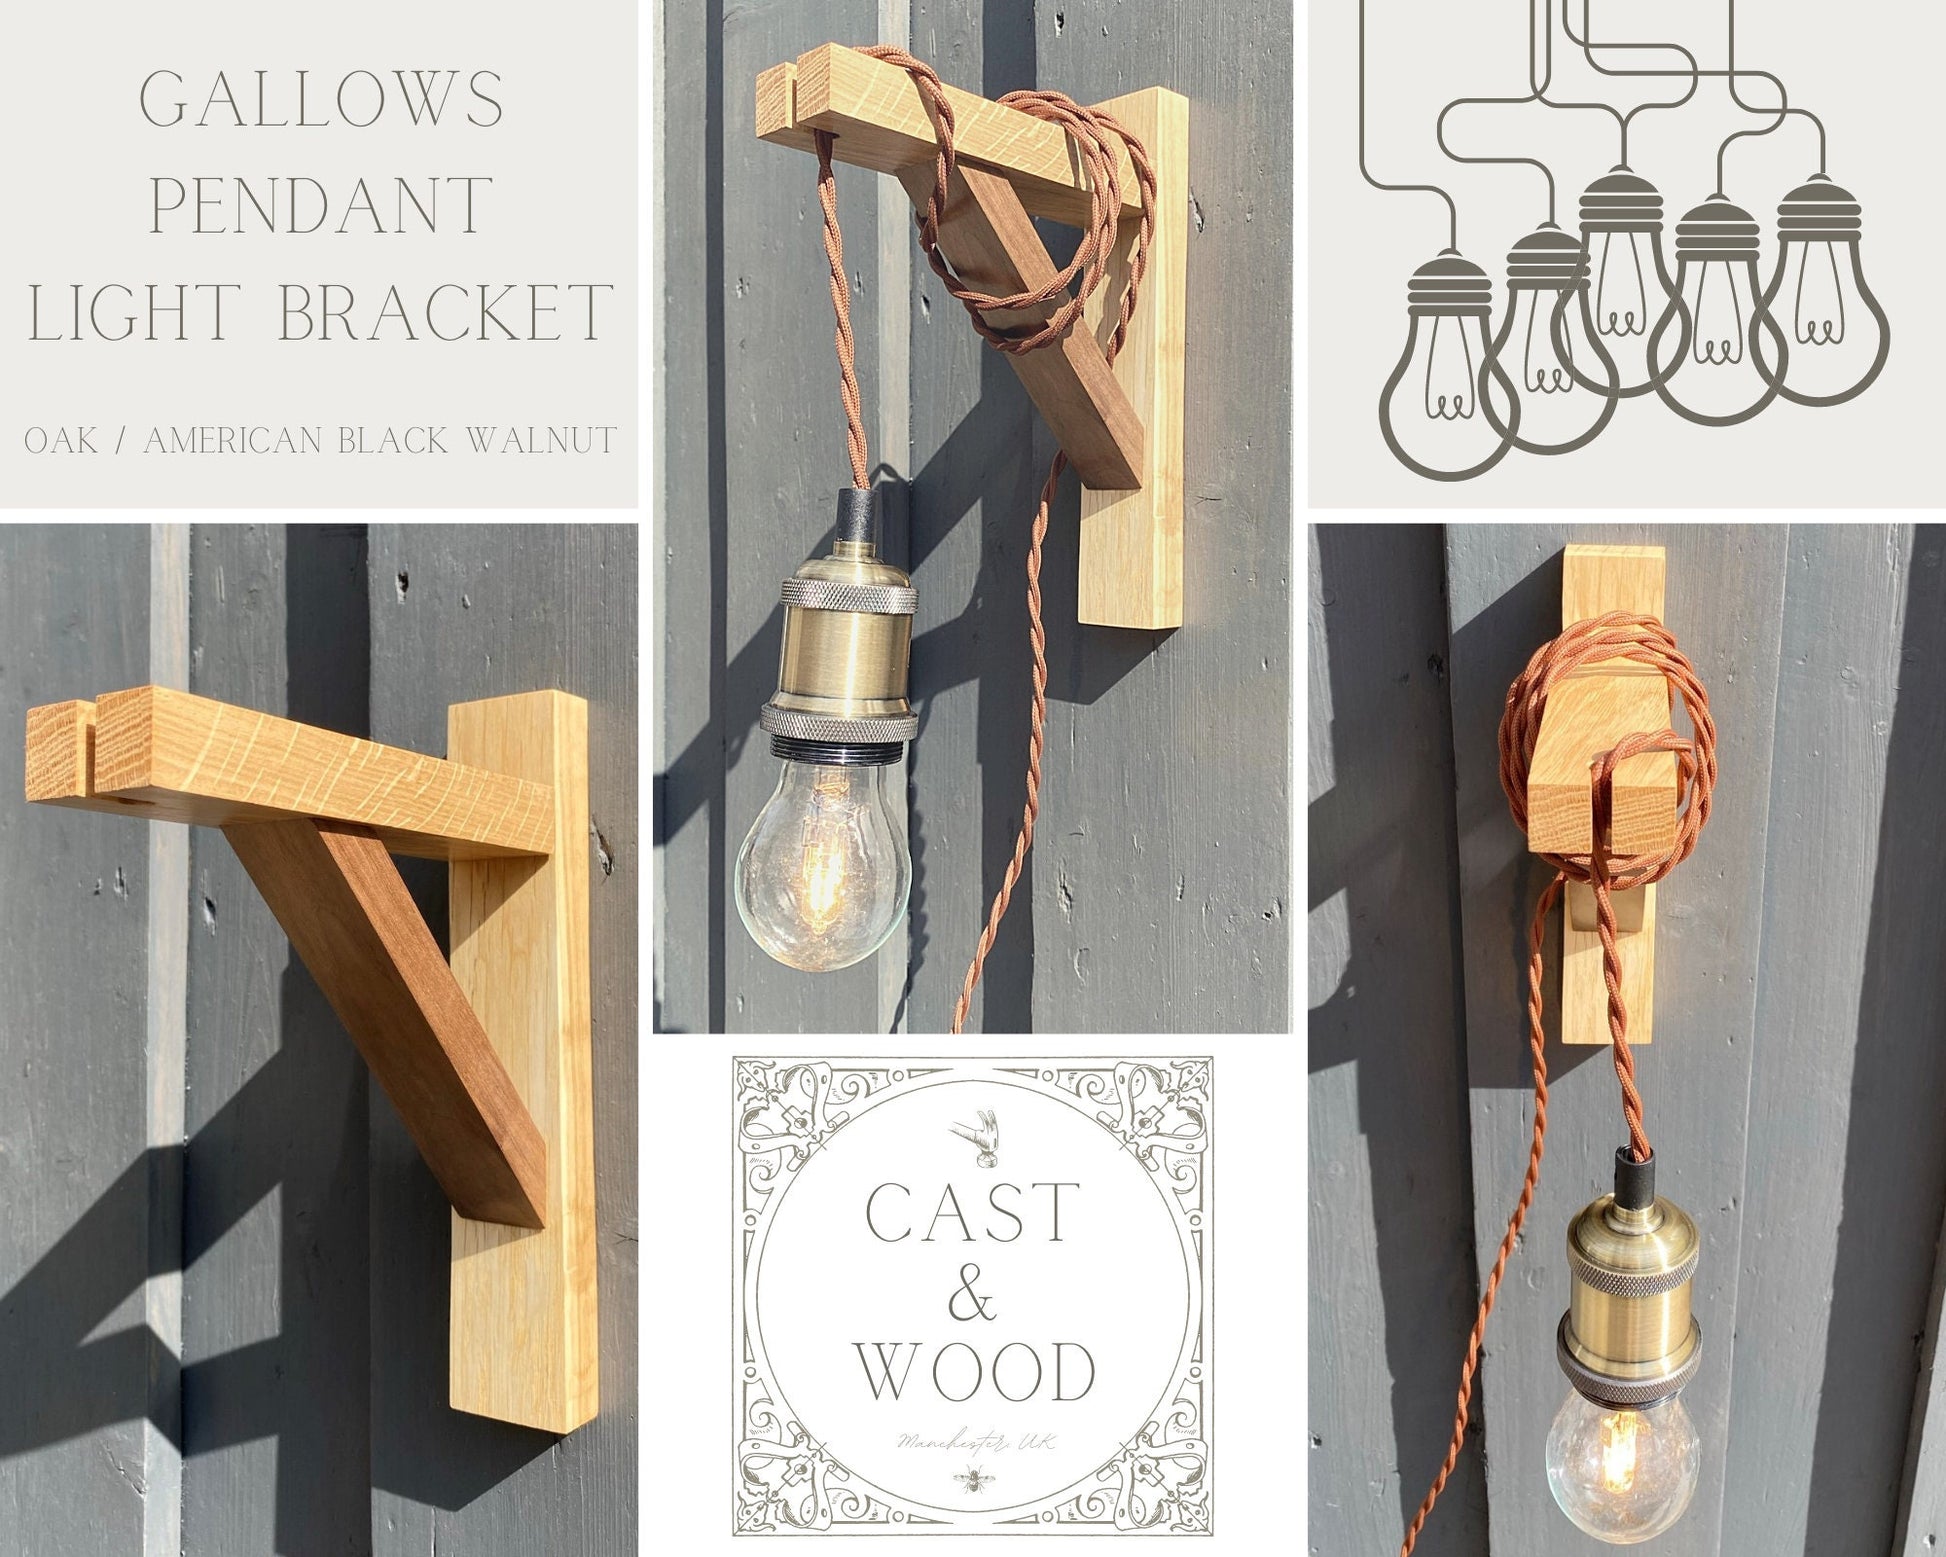 Solid Oak & American Black Walnut Gallows Pendant Wall Light Bracket freeshipping - Cast & Wood